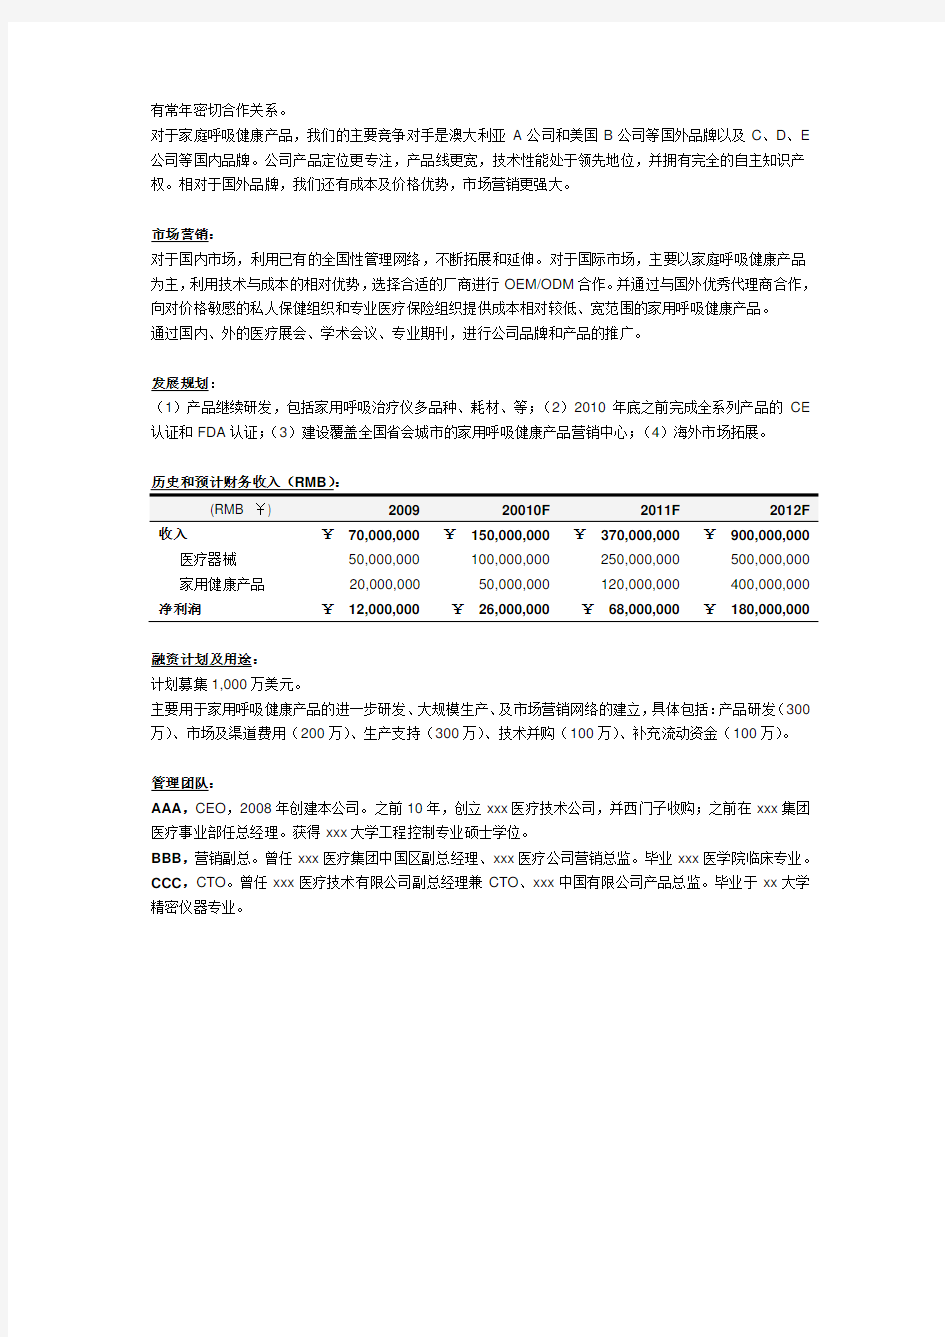 XXX医疗器械公司 商业计划书执行摘要-中文